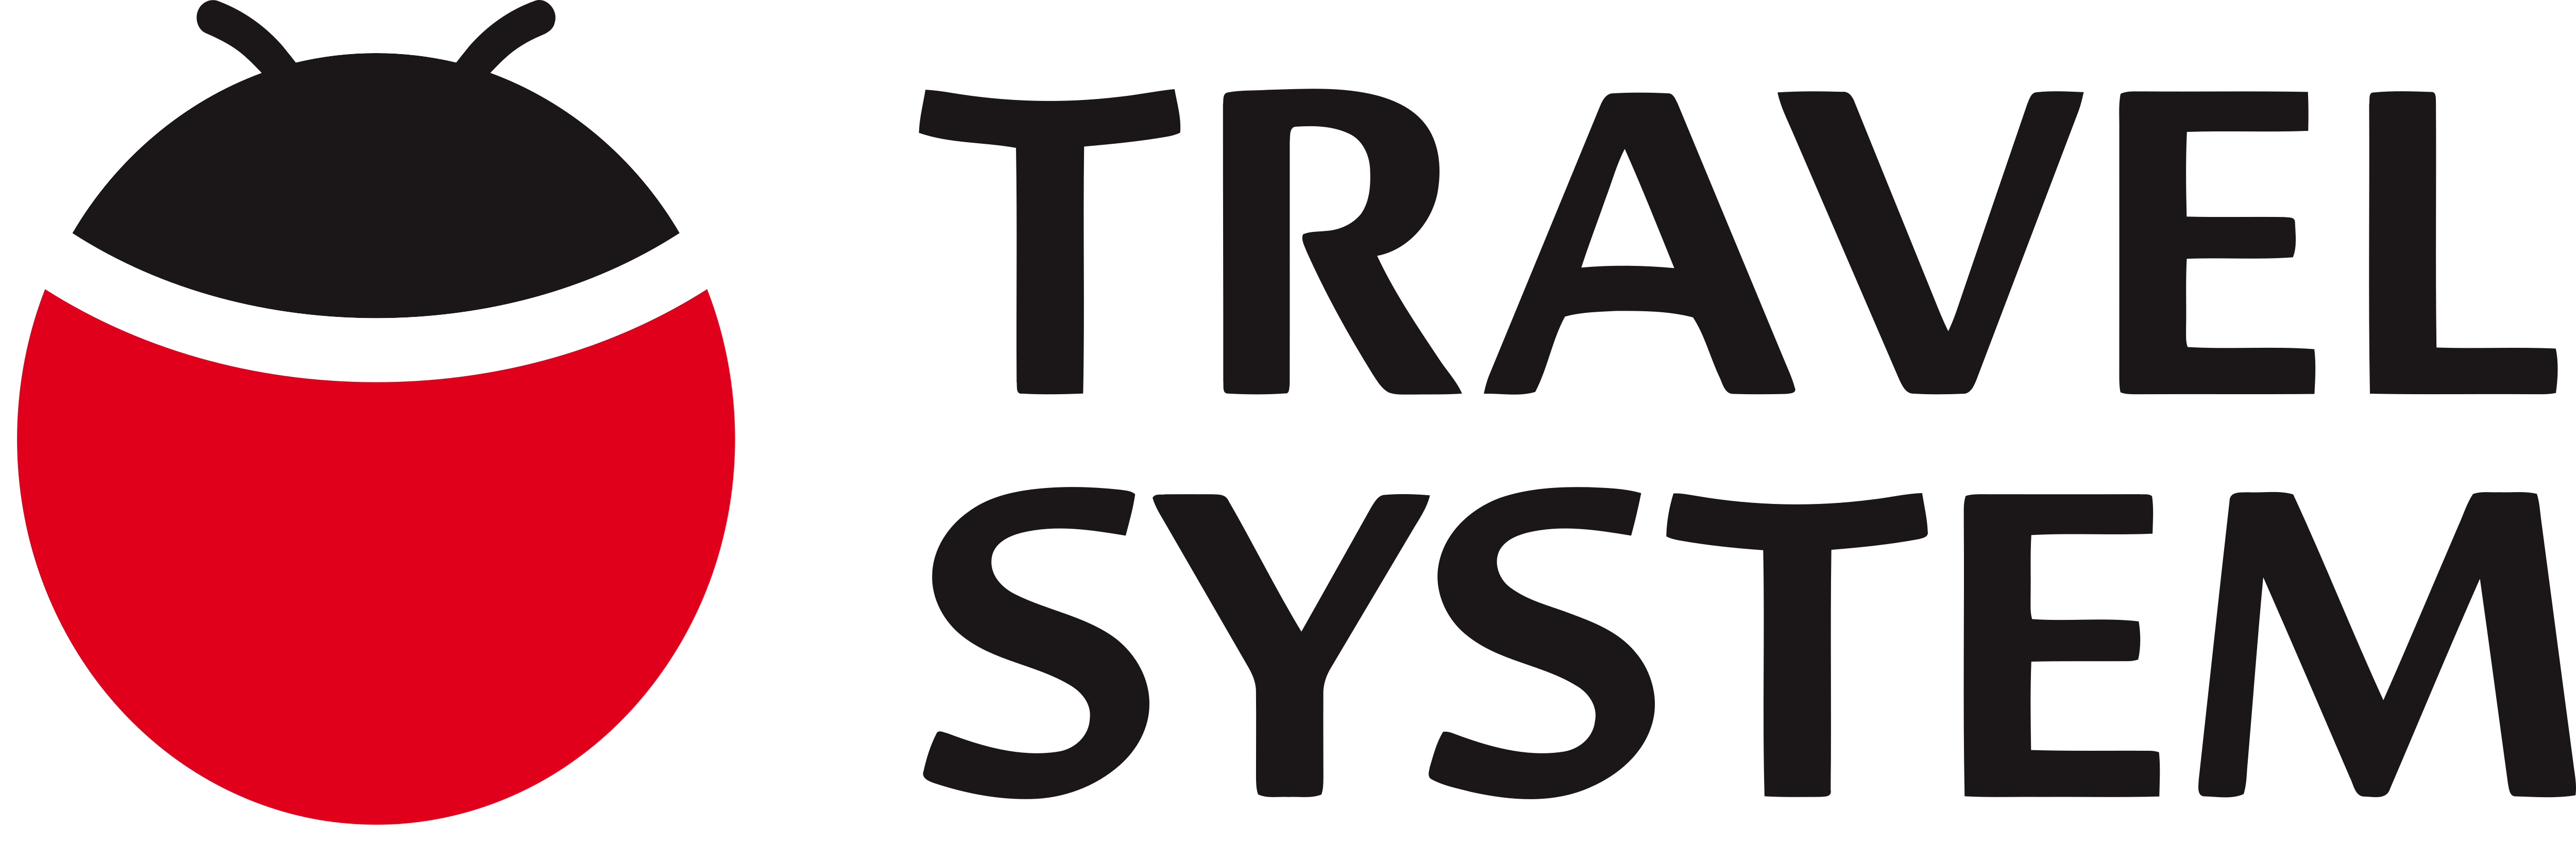 Travel System – Logos Download